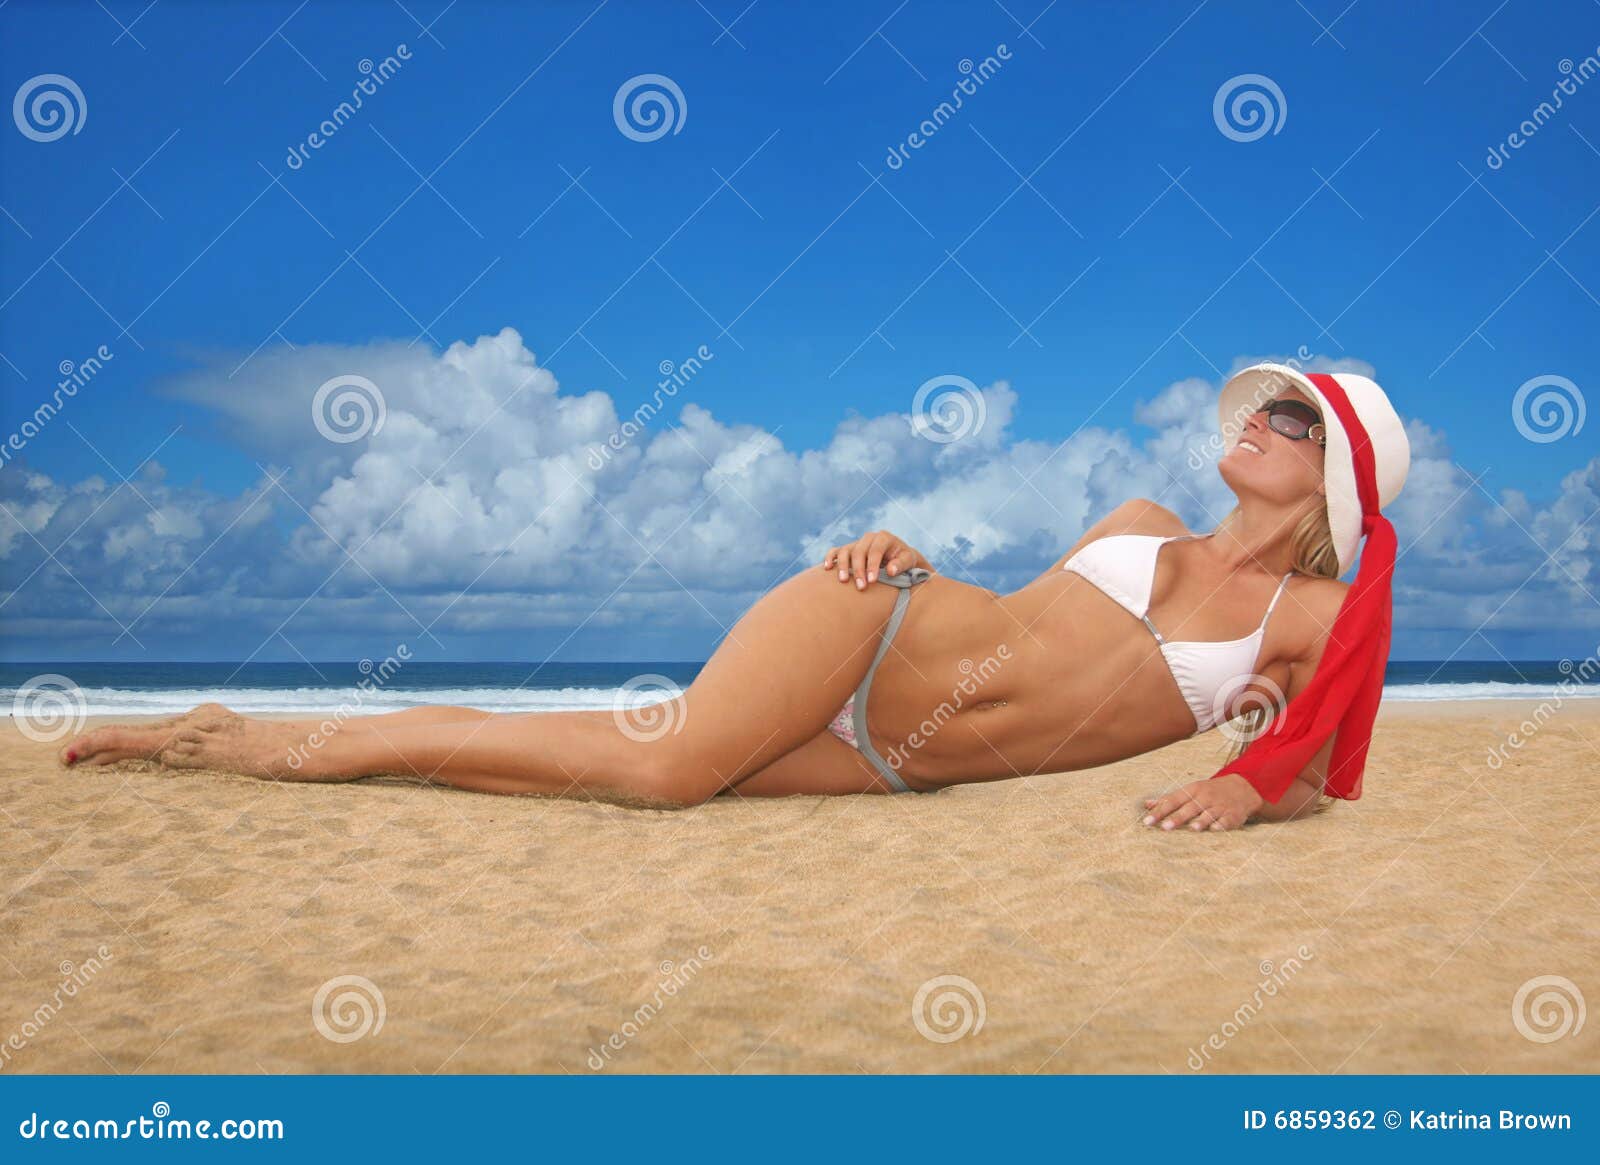 22,055 Beautiful Blonde Woman Bikini Stock Photos